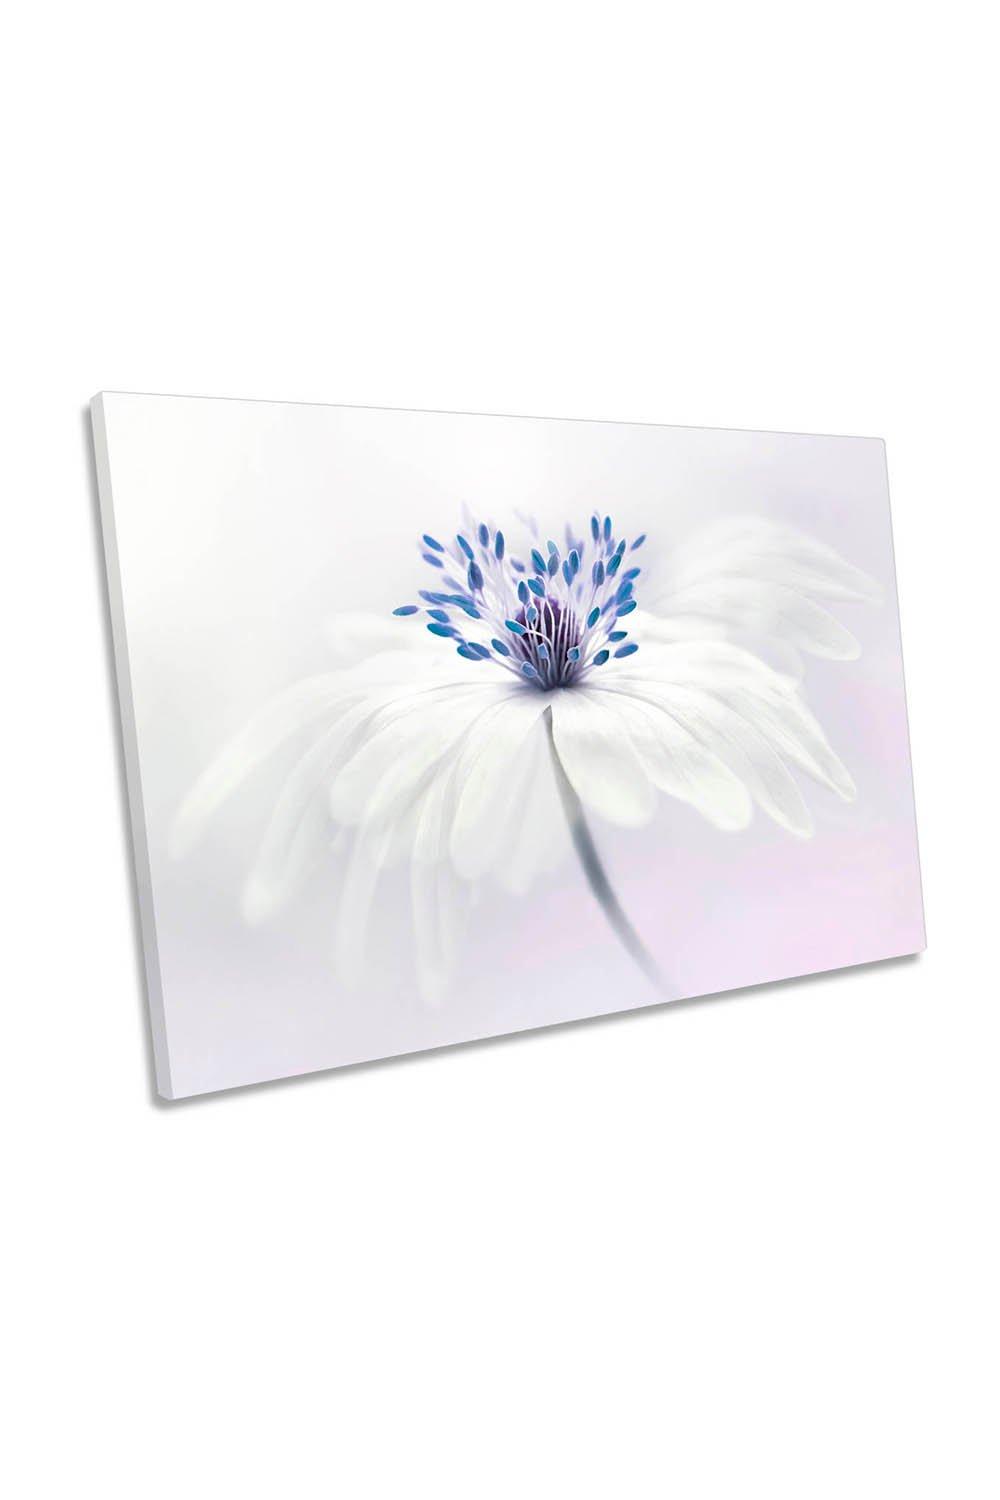 Anemone Blanda Soft Flower White Canvas Wall Art Picture Print